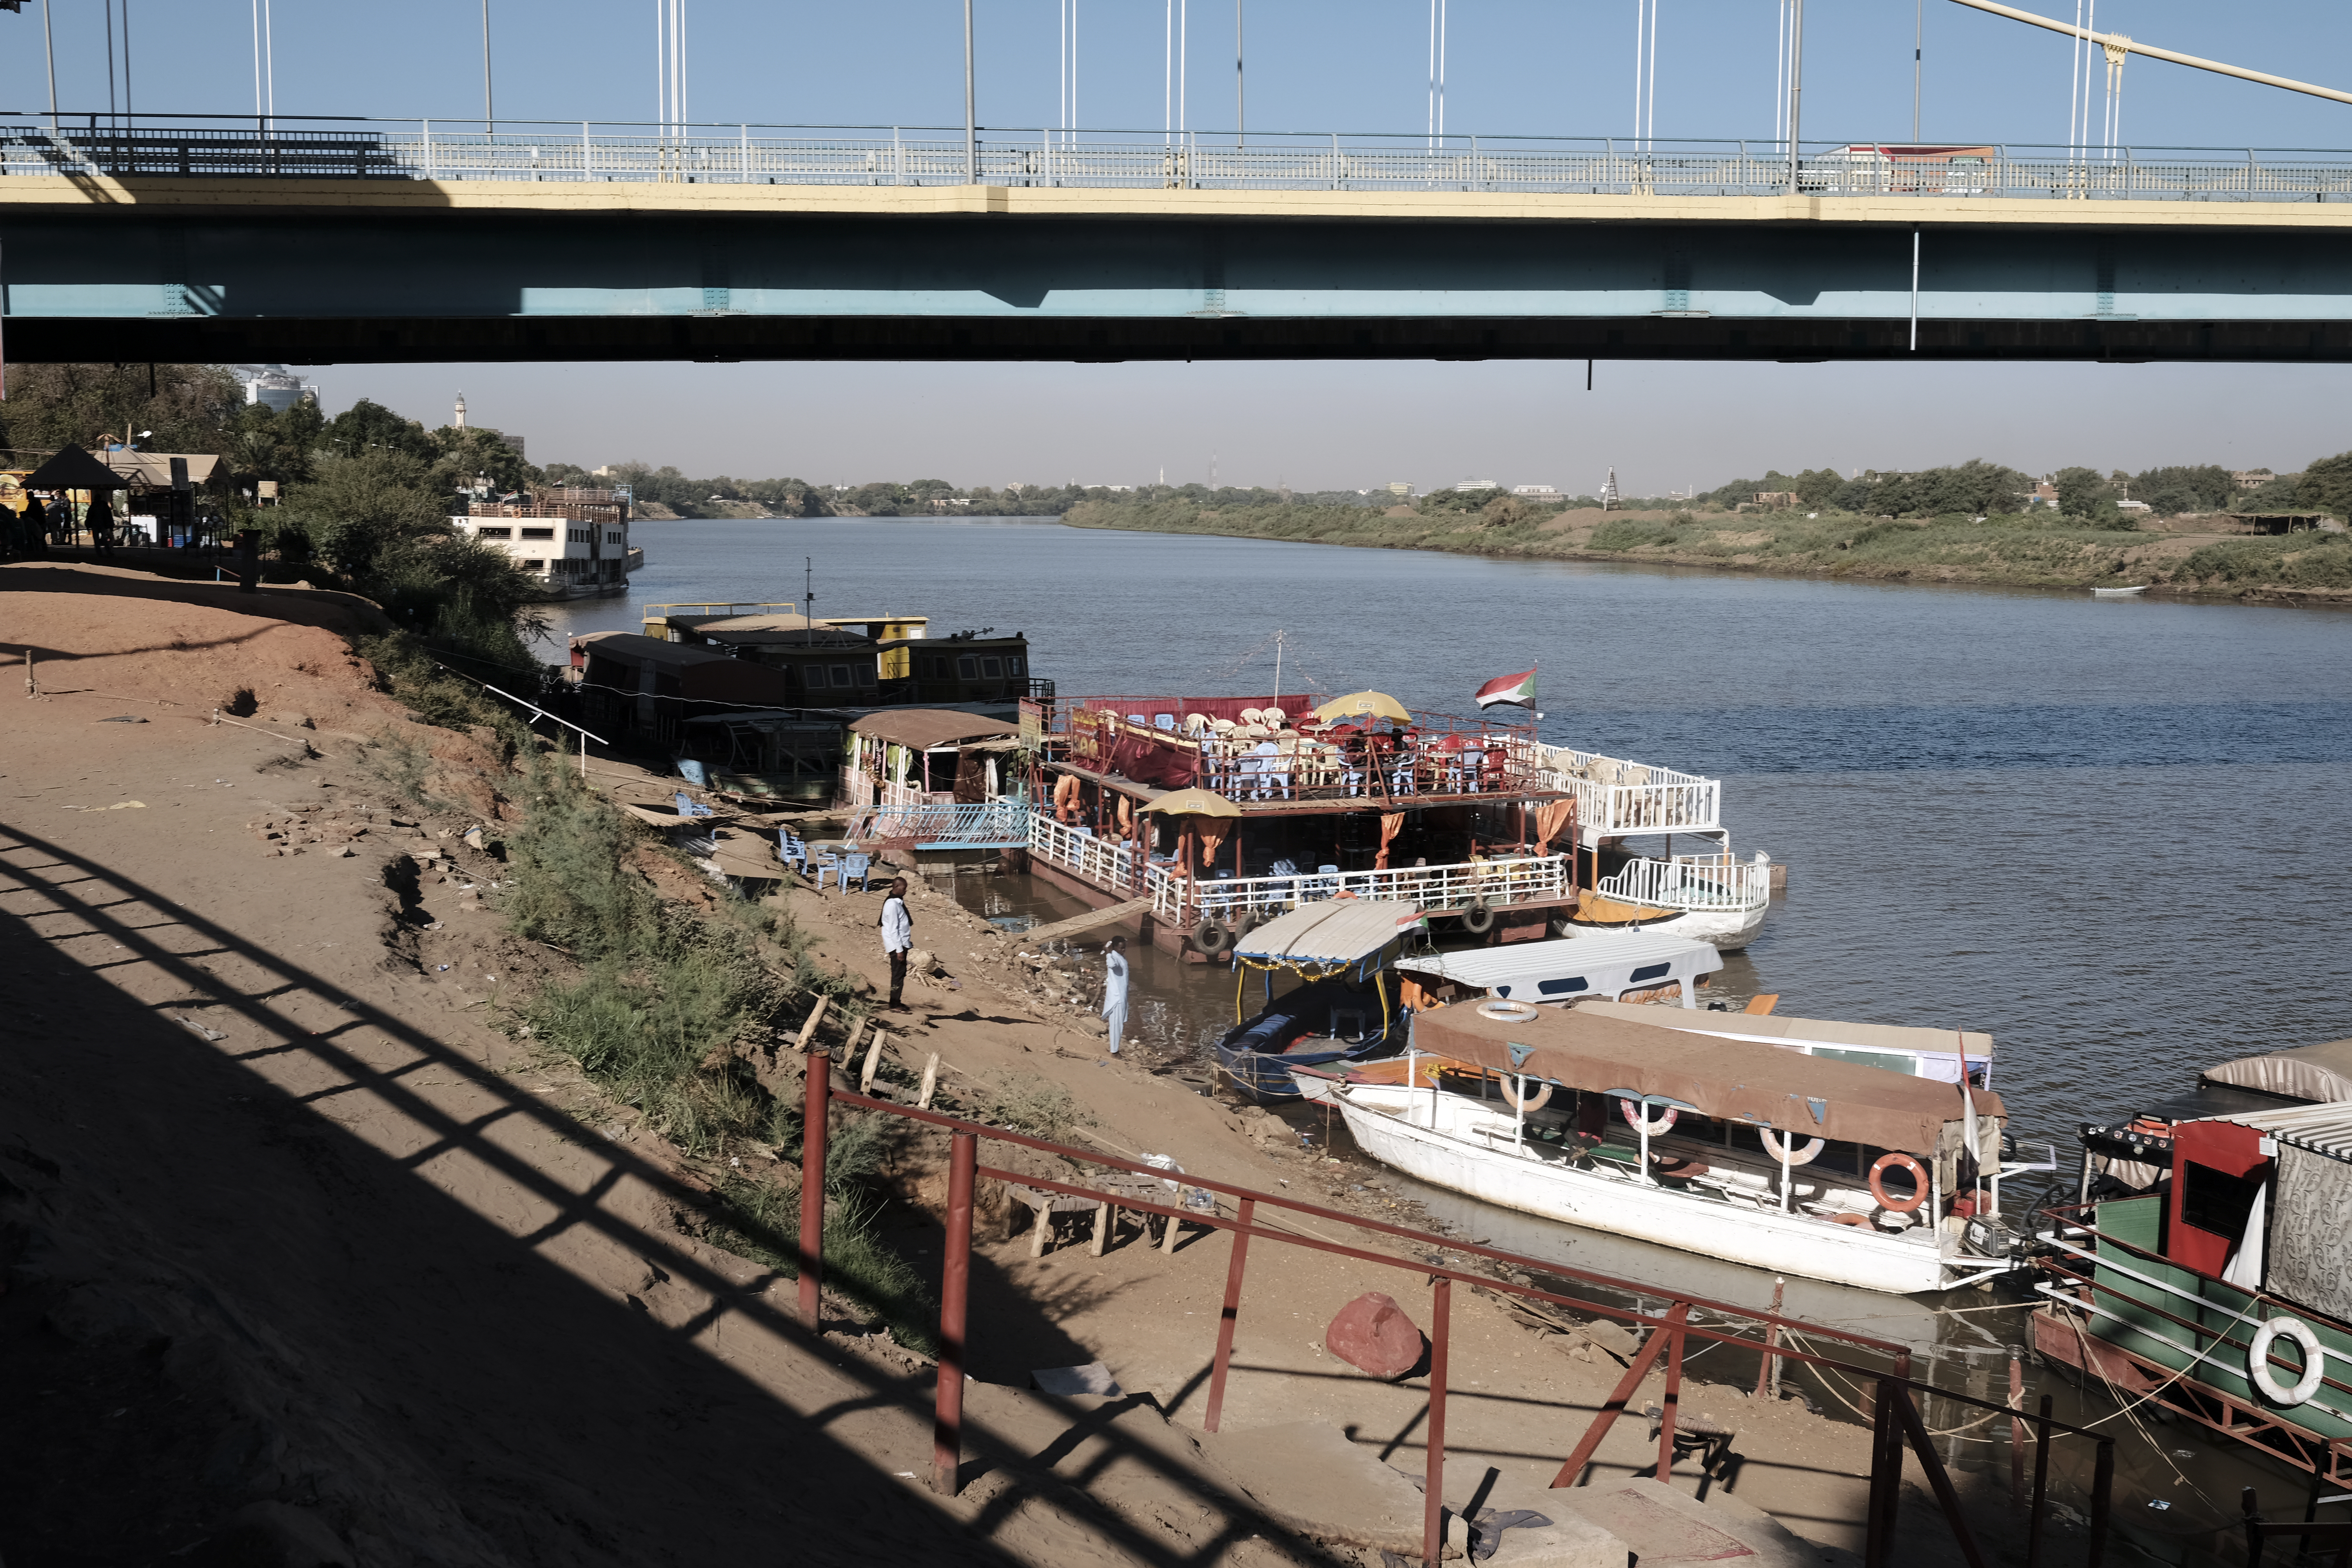 Tuti bridge,Khartoum, Sudan photo by  Christopher Michel,2017 CC BY-NC-ND 2.0 license